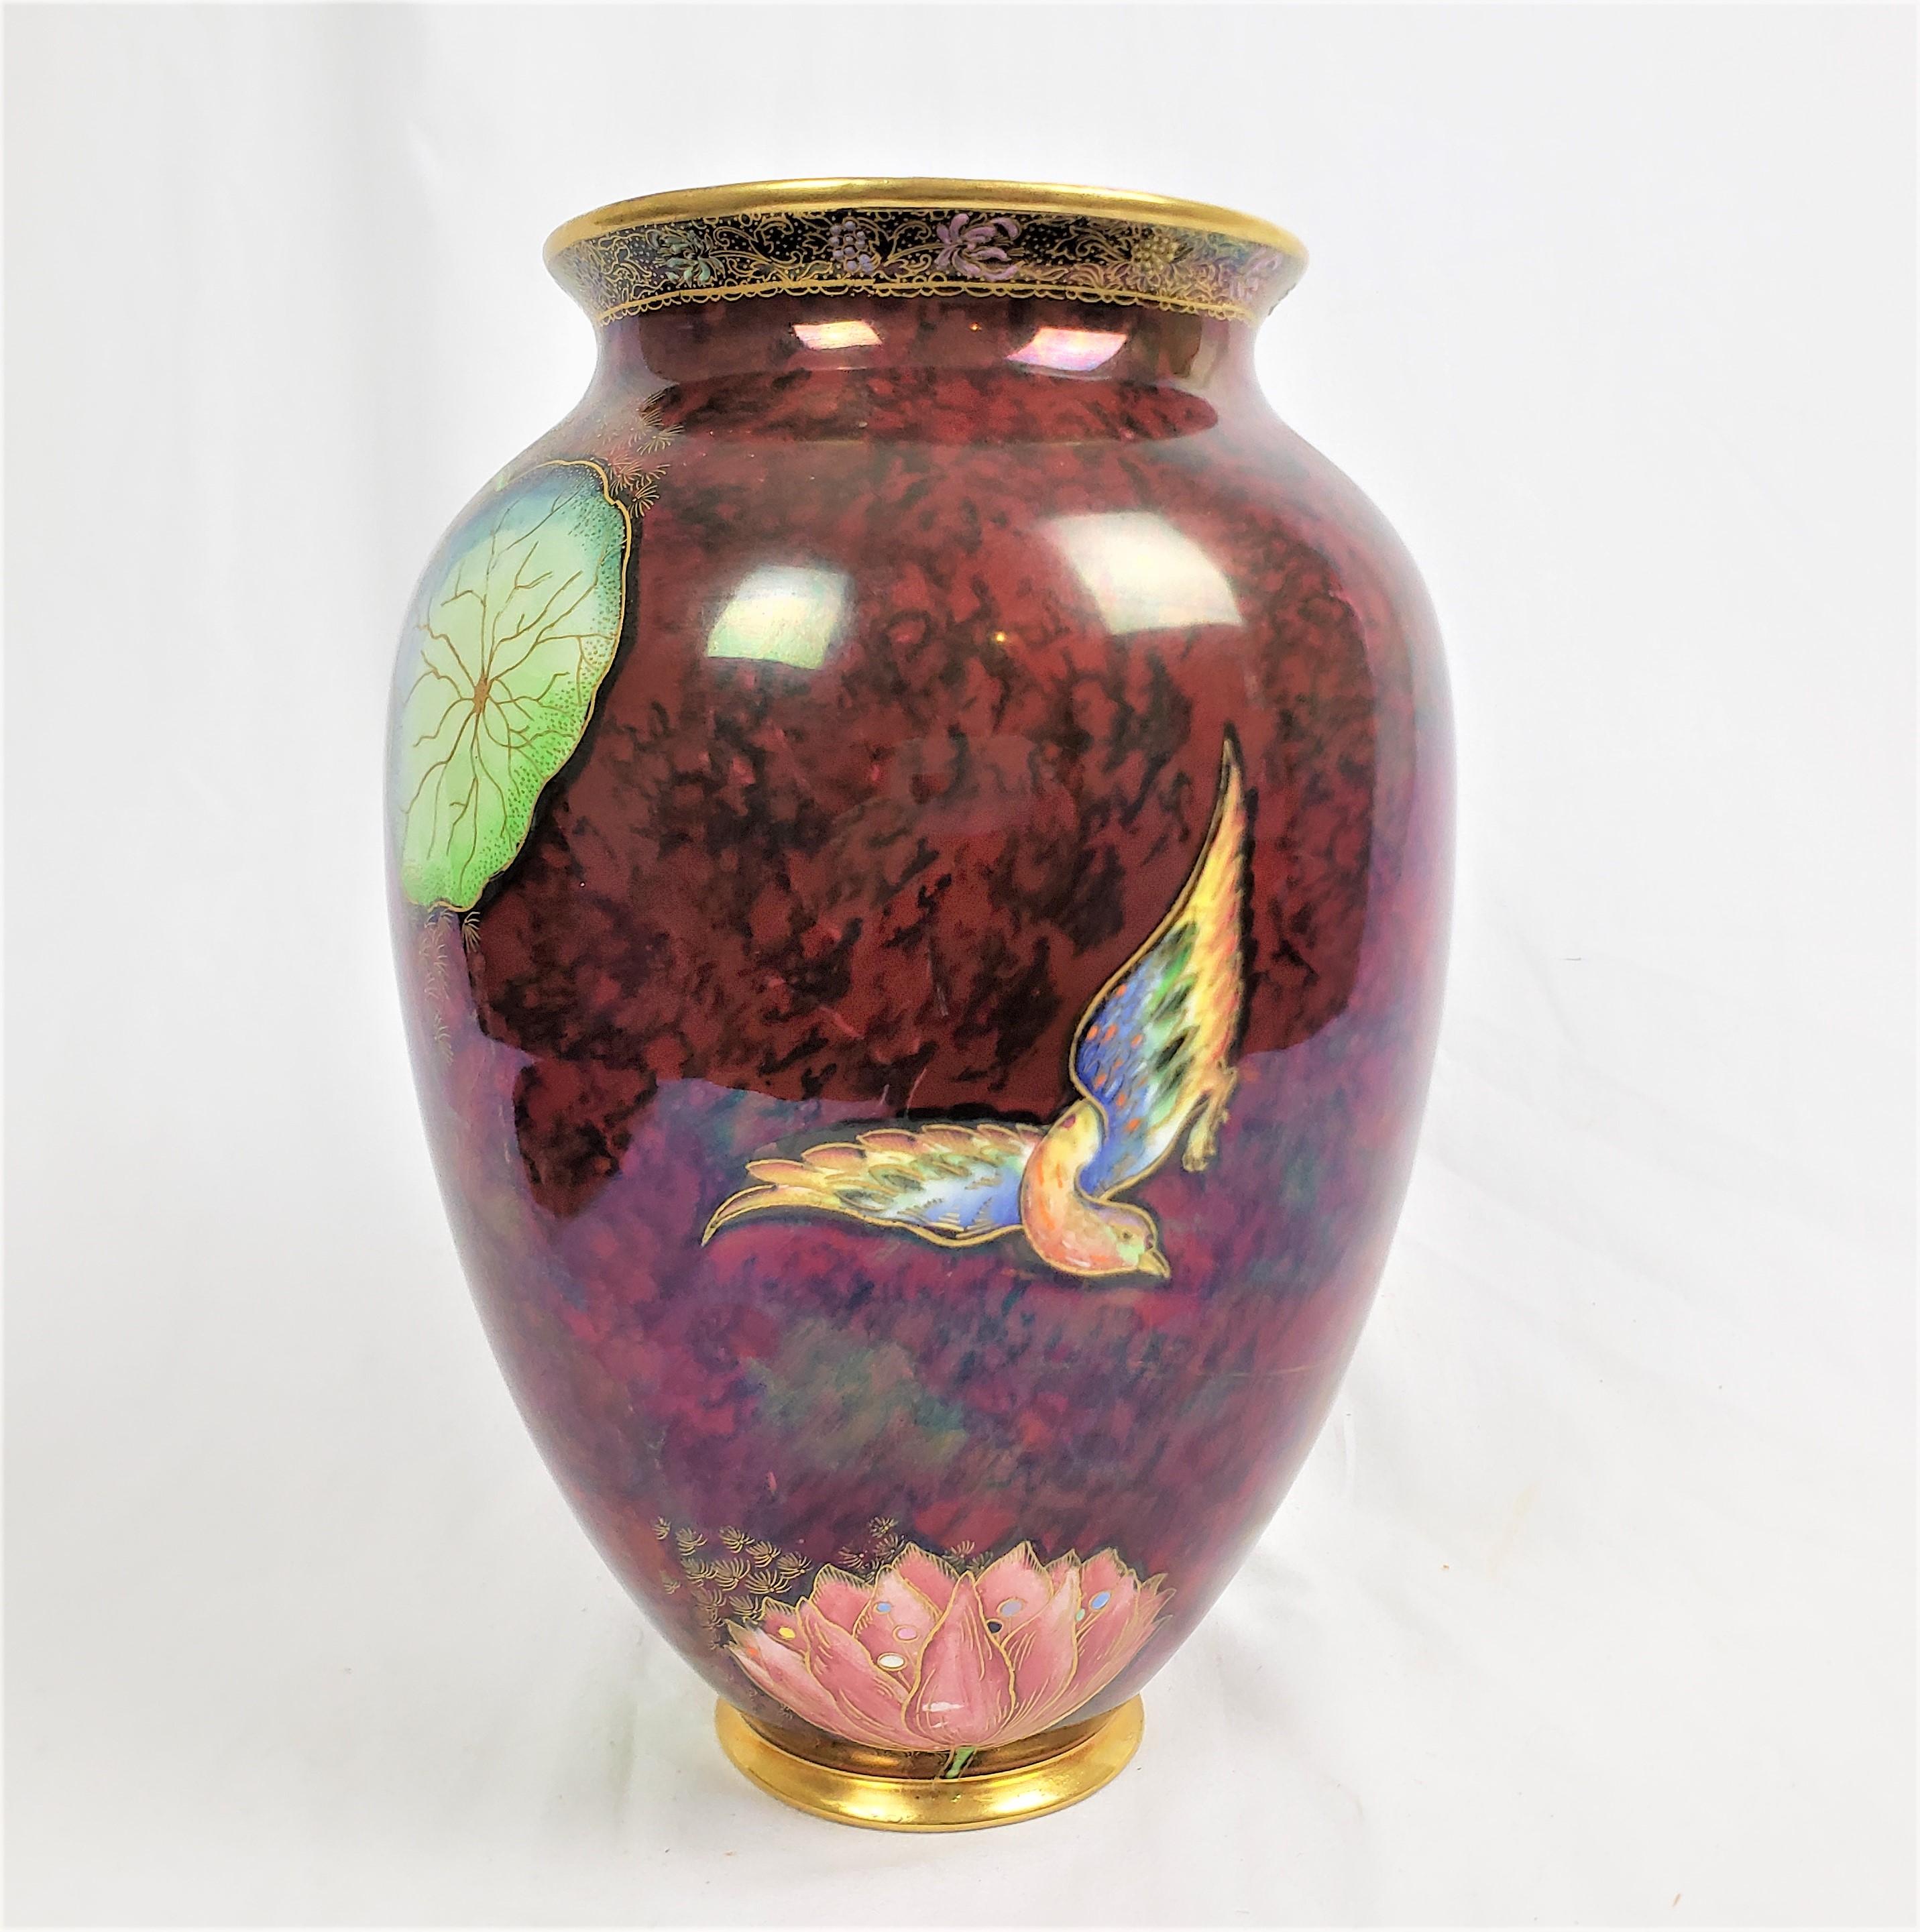 19th Century Antique Art Deco Era Carlton Ware Vase with Asian Inspired Decoration